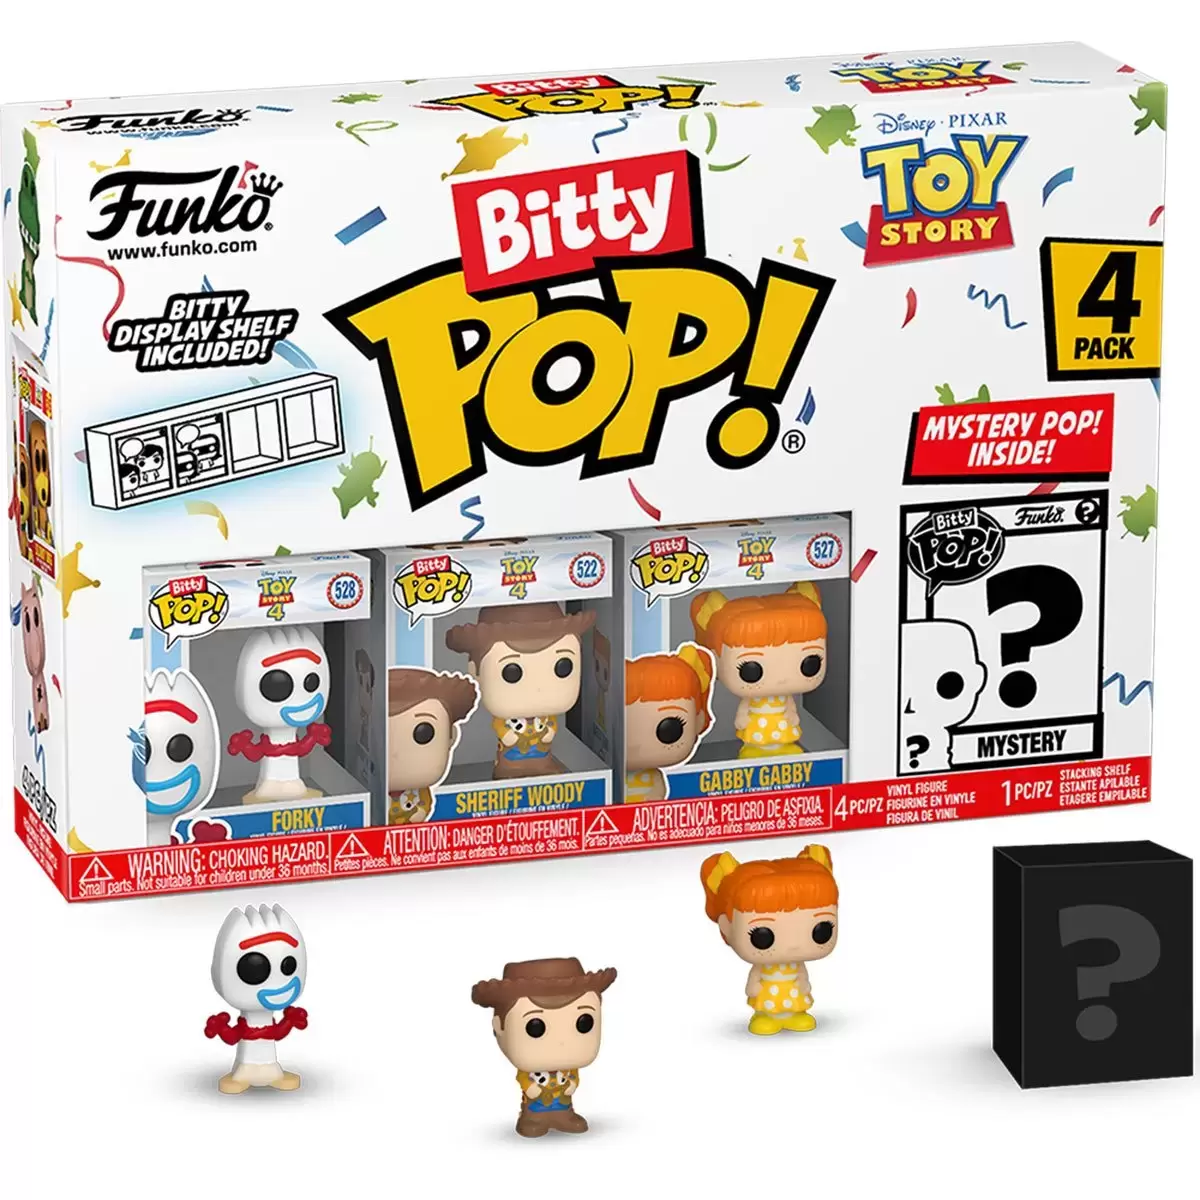 Bitty POP! - Toy Story - Forky, Sheriff Woody, Gabby Gabby & Mystery